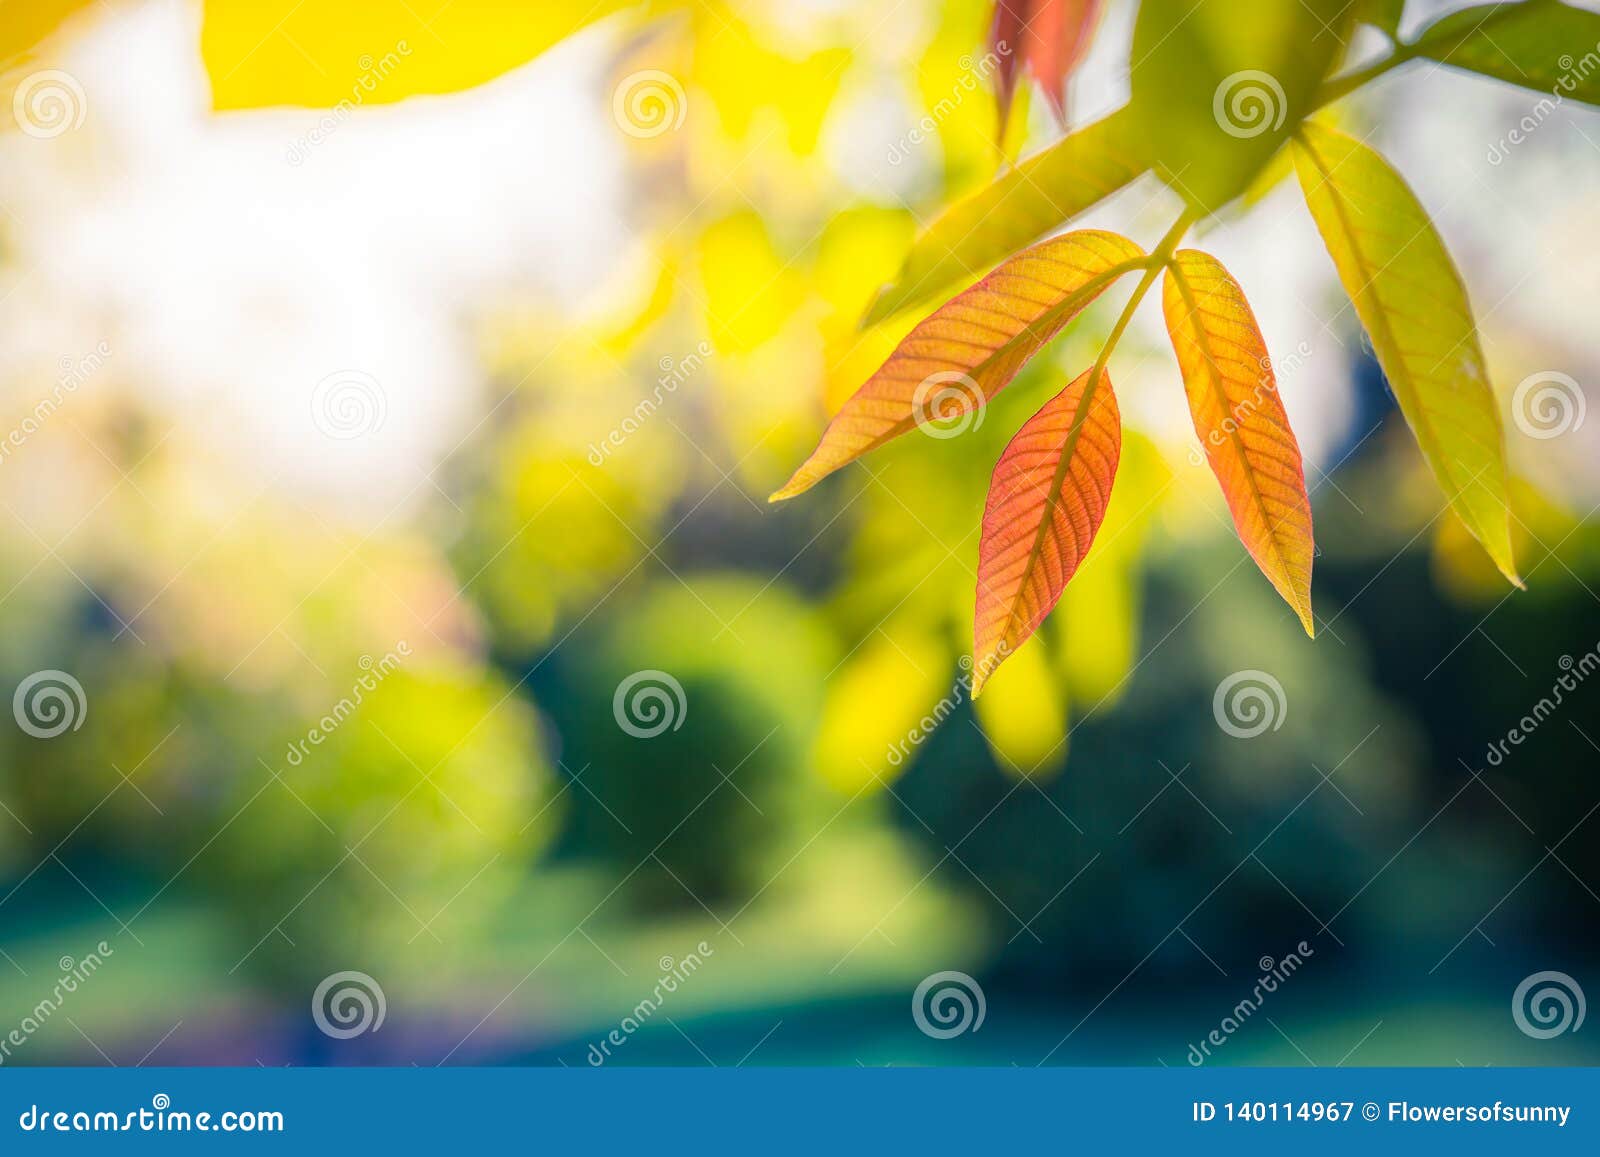 Beautiful Colorful Leaves, Seasonal Nature Background Stock Image - Image  of garden, flower: 140114967